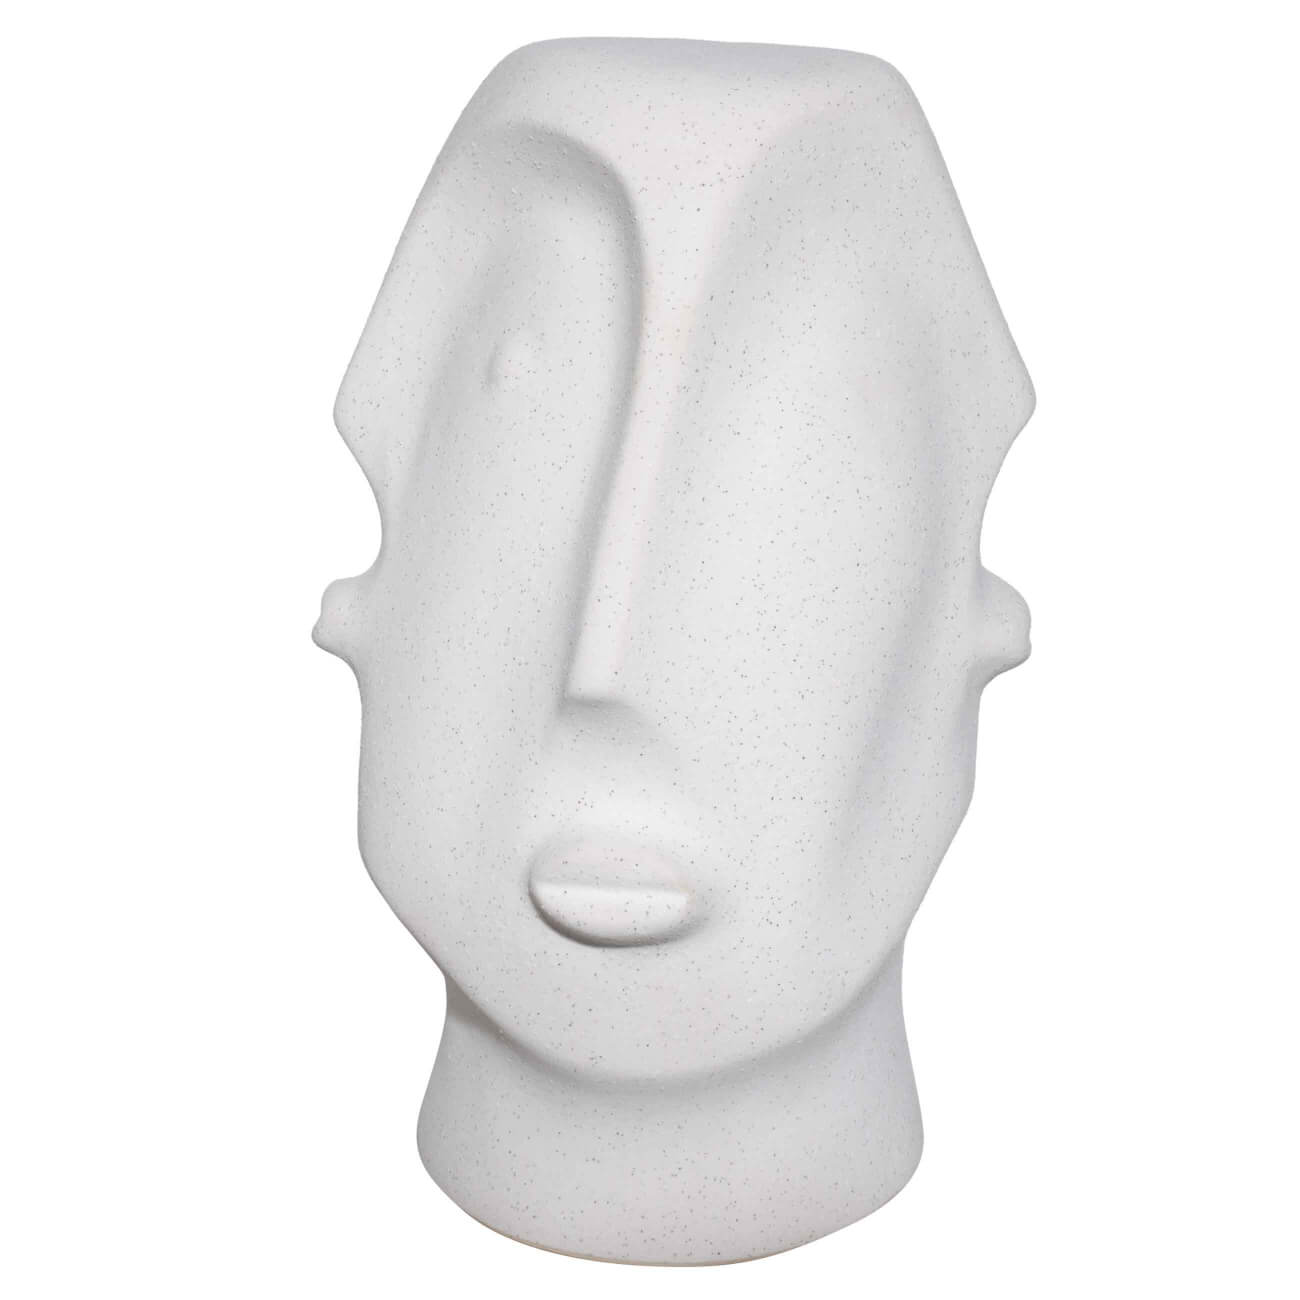 Статуэтка, 31 см, керамика, молочная, в крапинку, Лица, Faces статуэтка слон